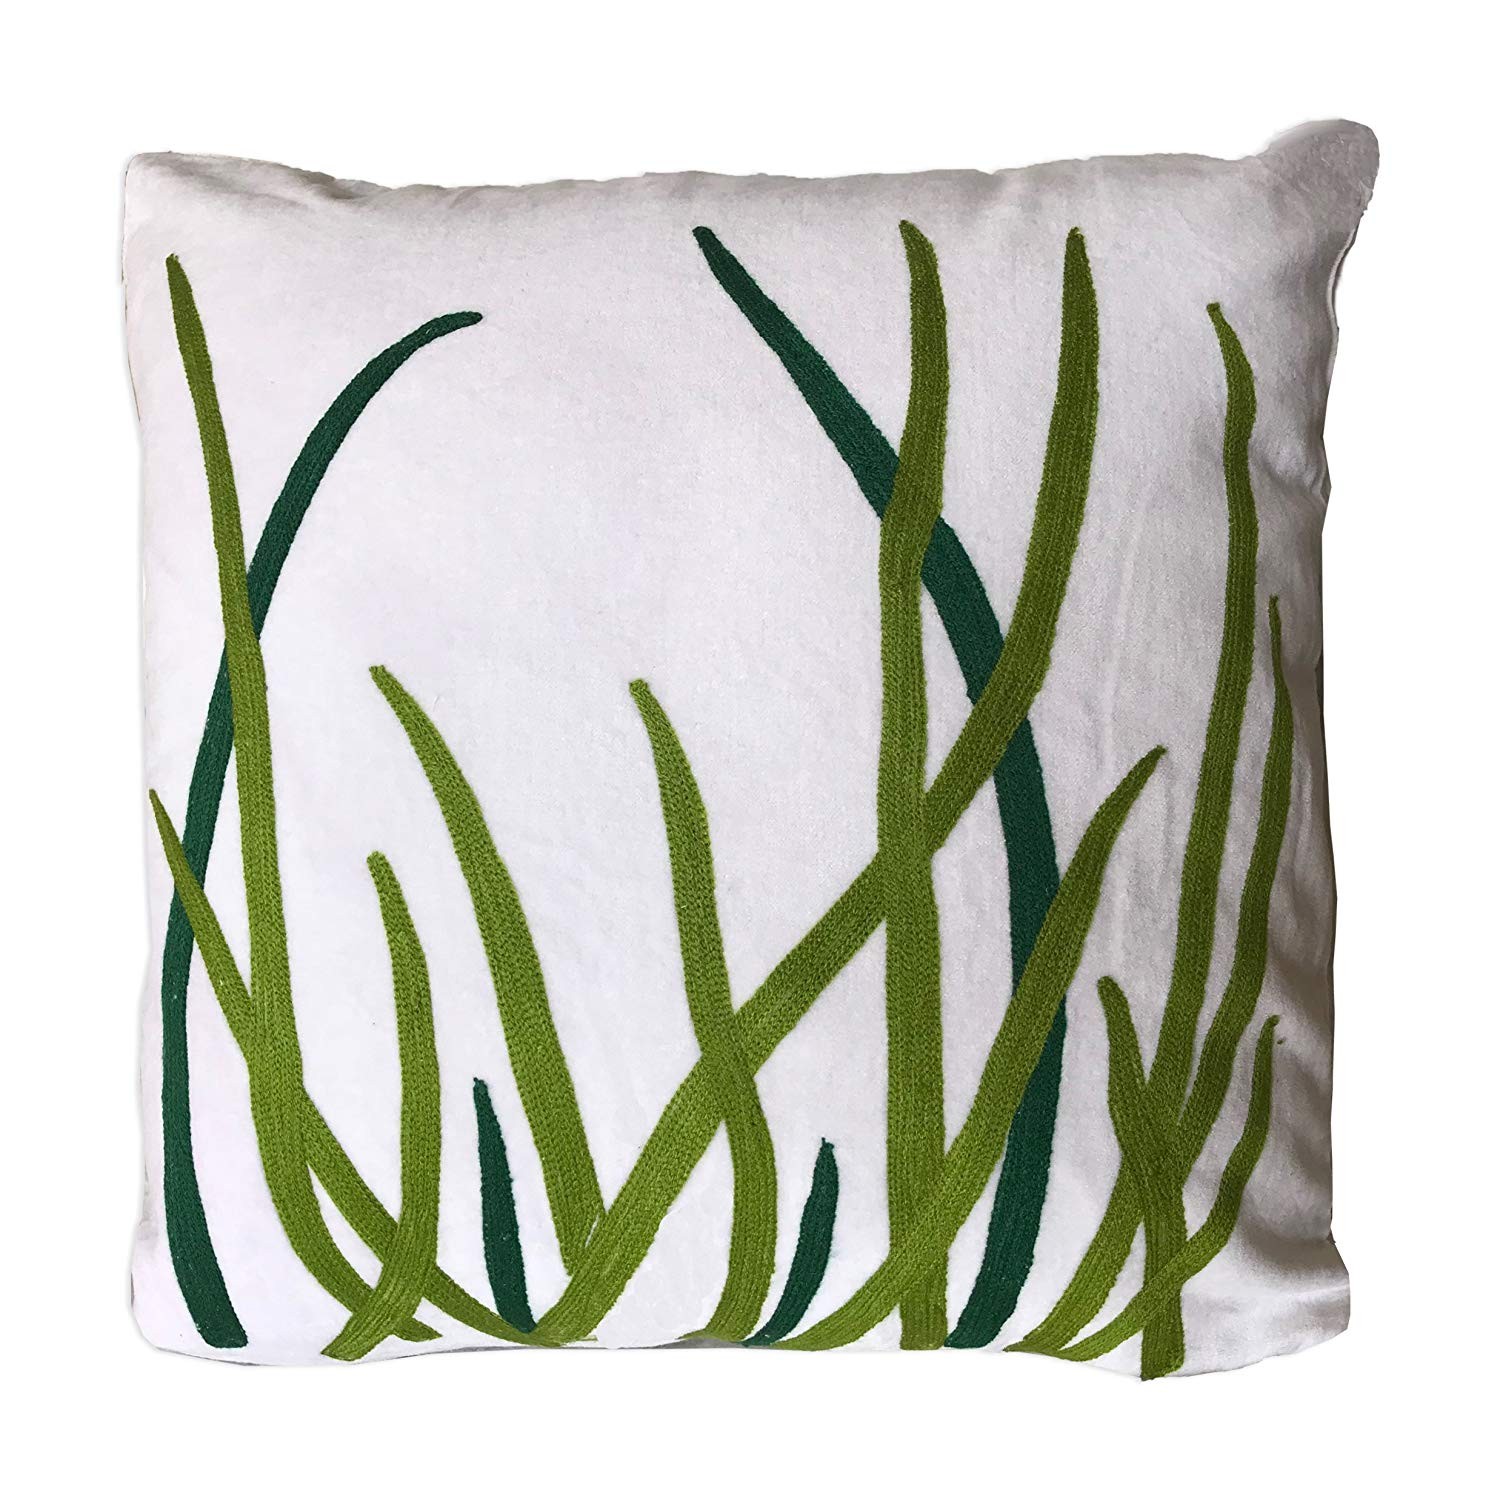 https://www.decorshore.com/845/olivia-18-inch-artisanal-decorative-throw-pillow-cover.jpg